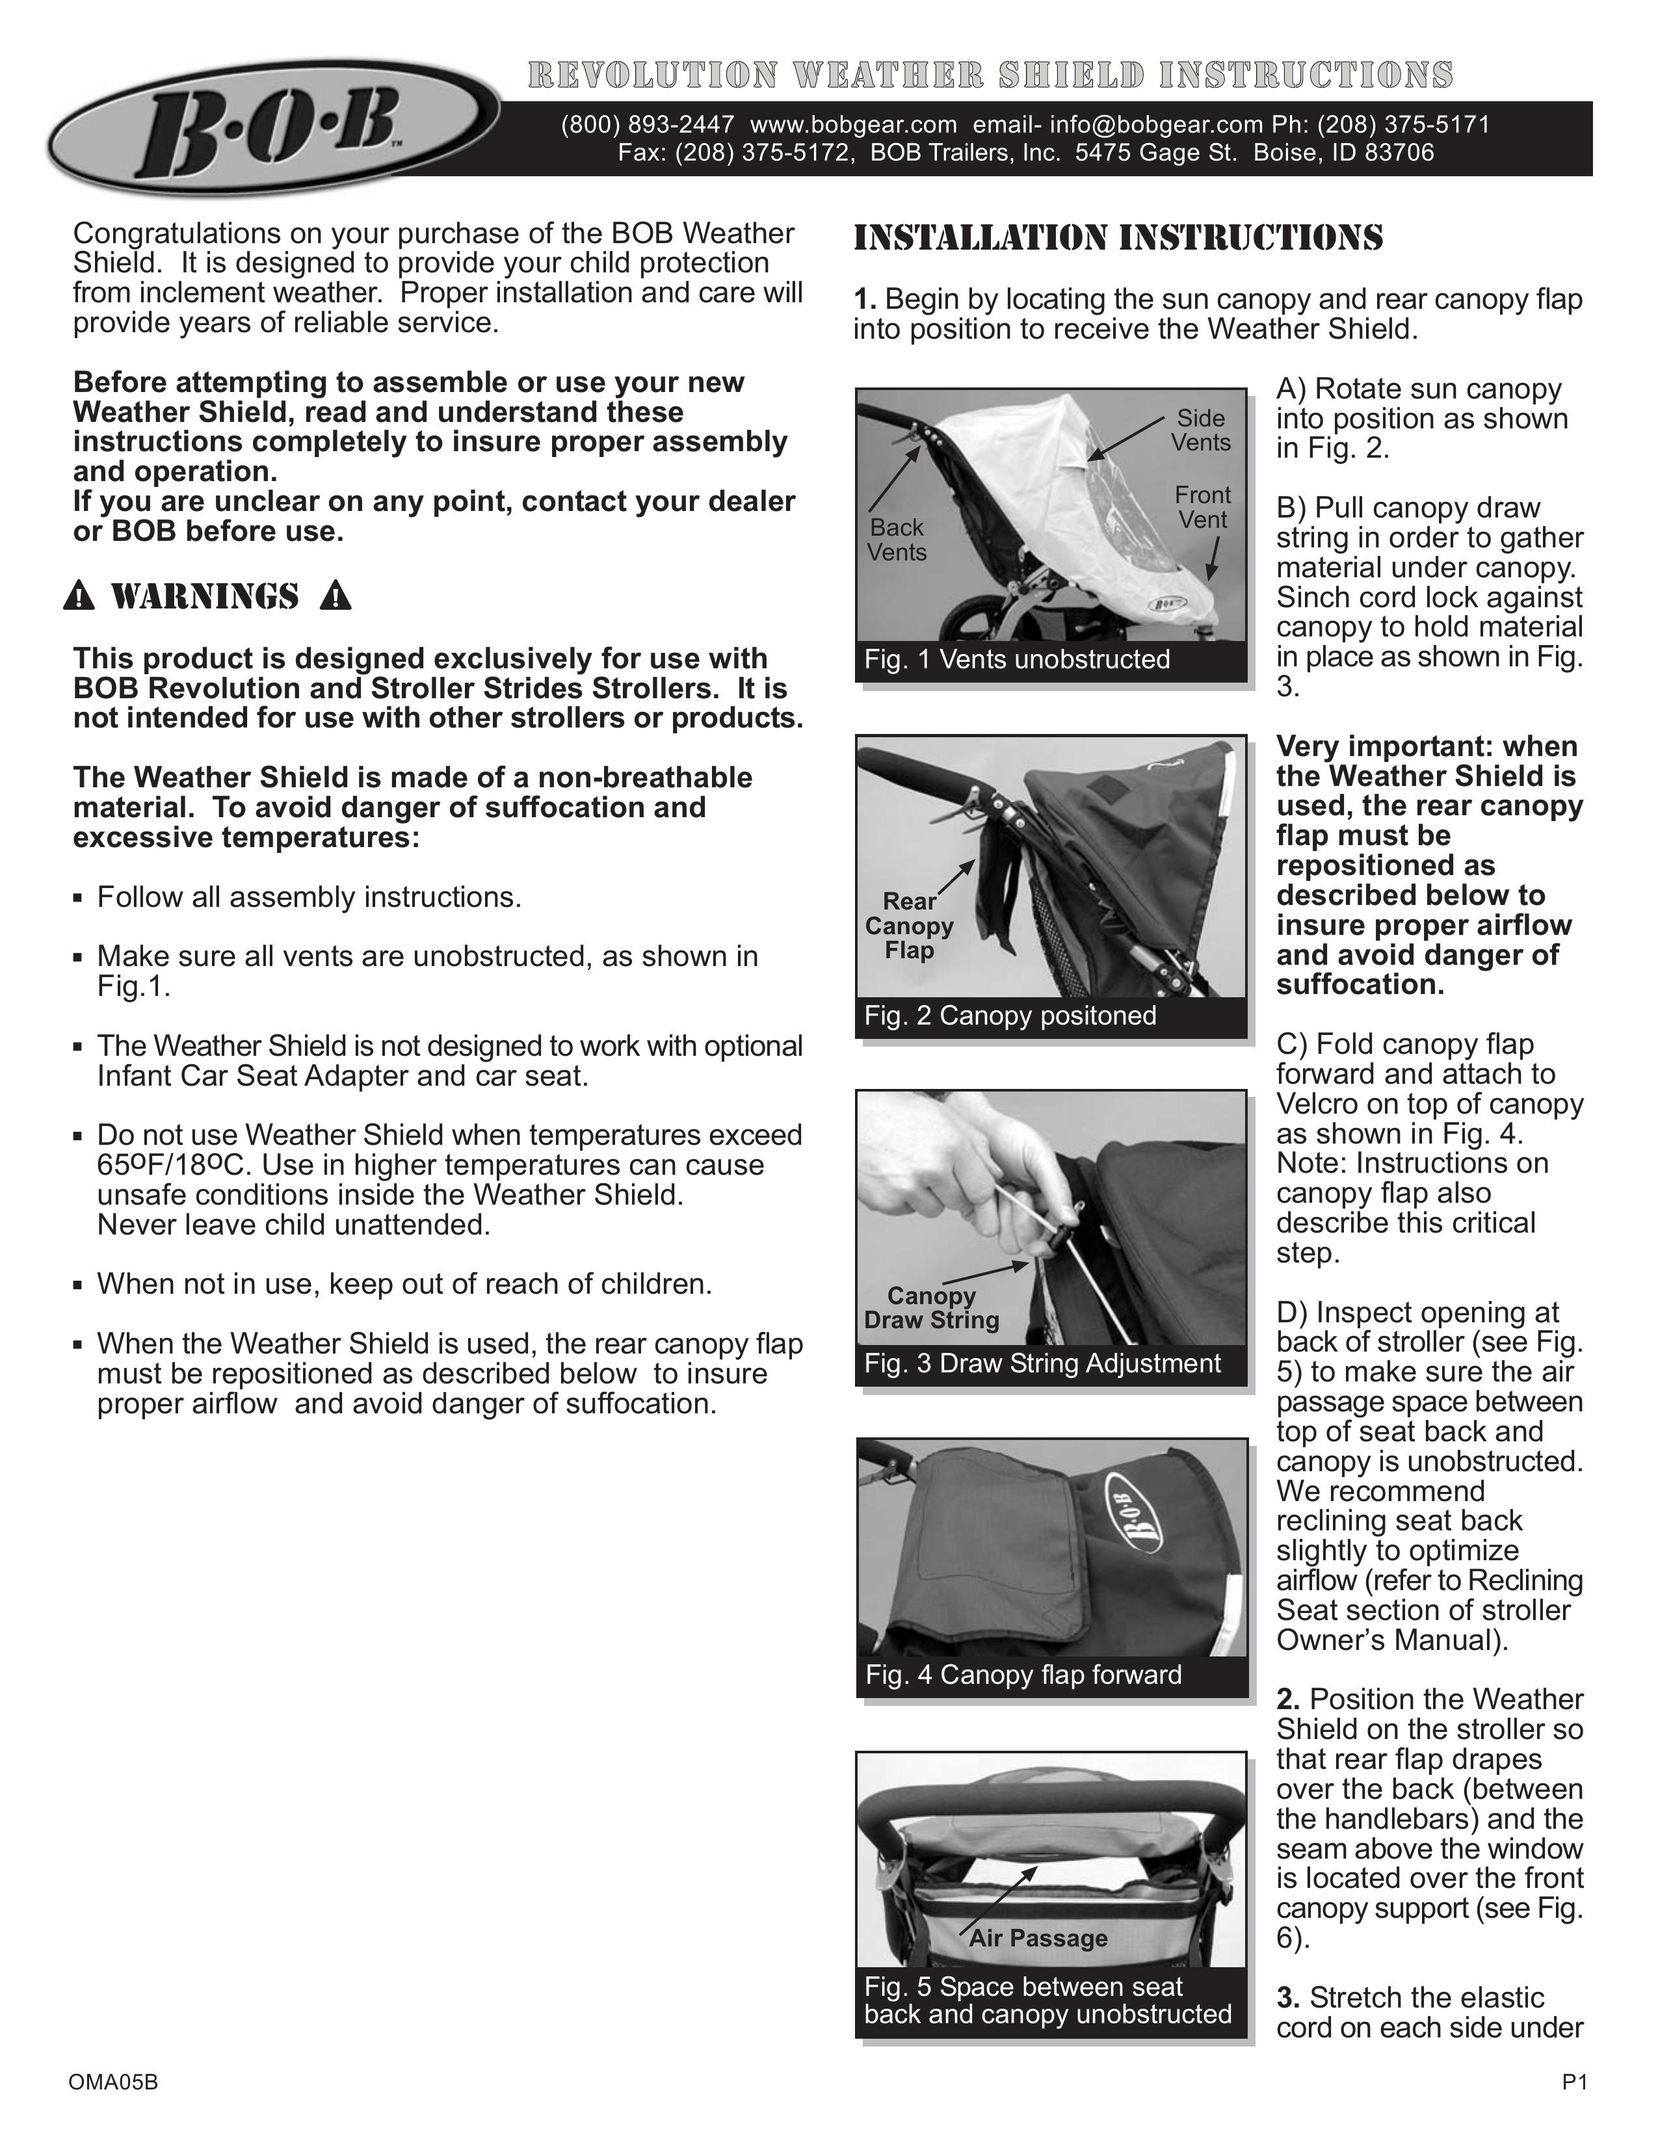 BOB Weather Shield Stroller User Manual